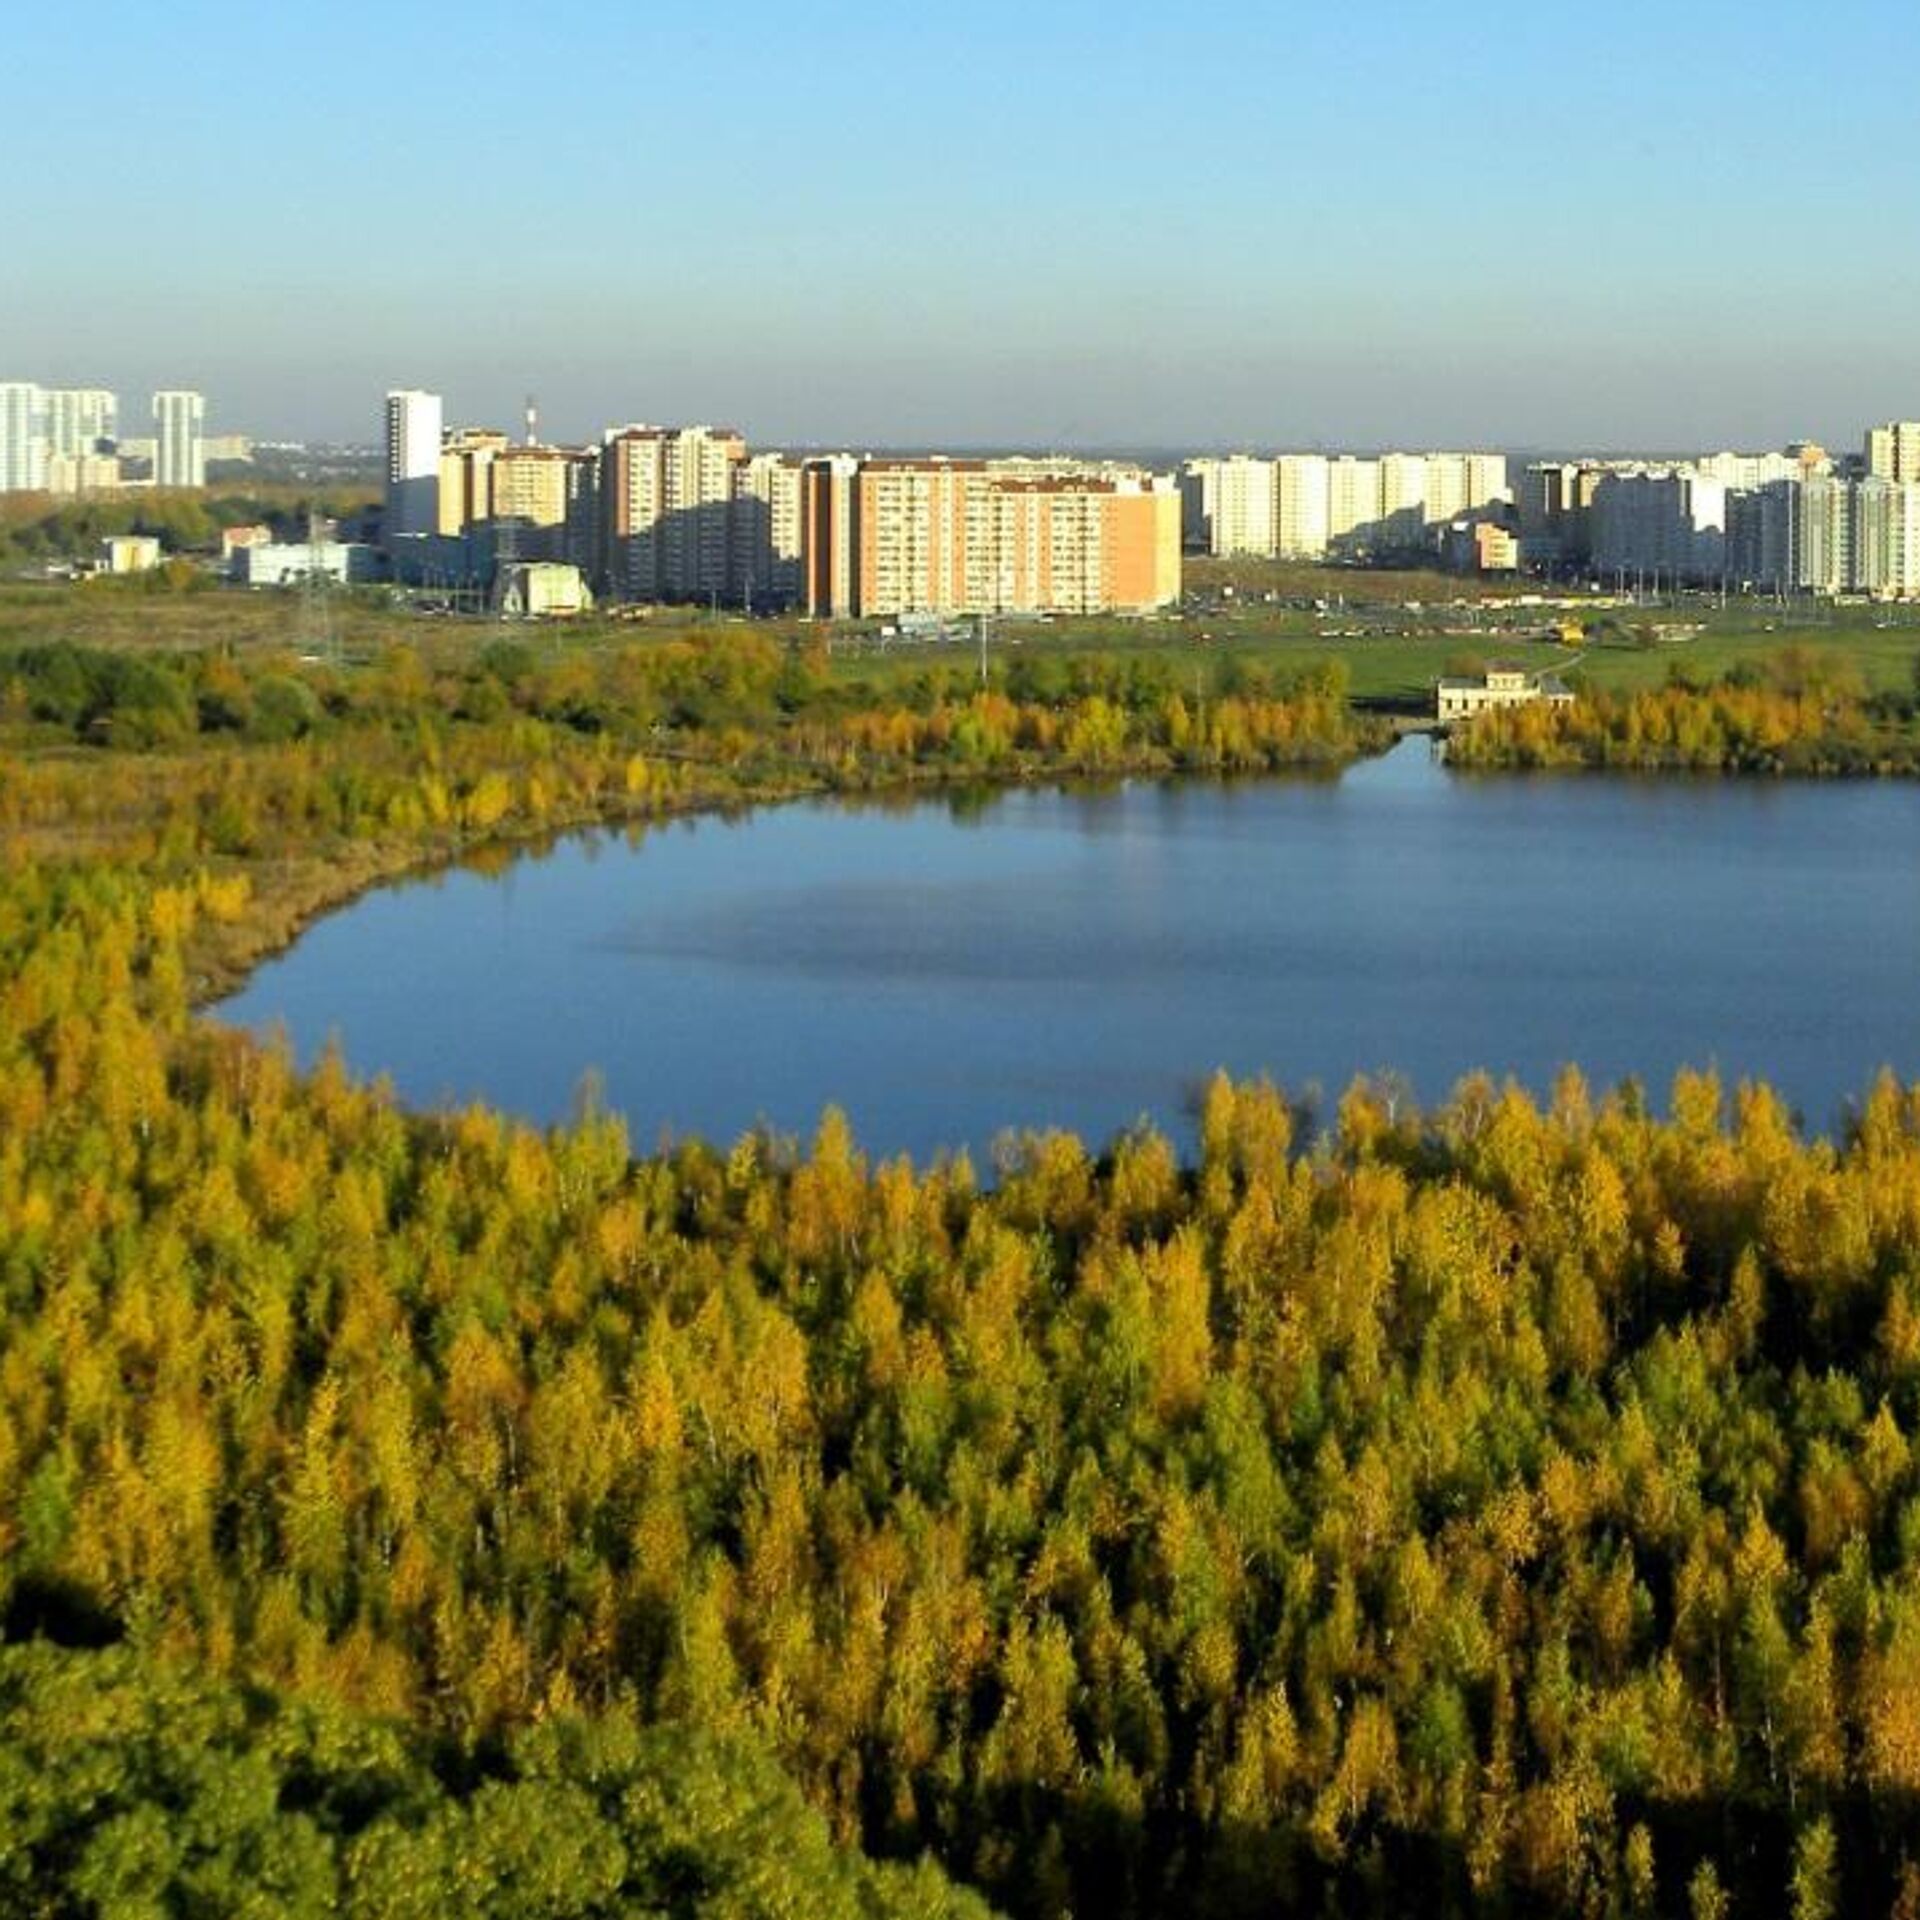 Погода в г озерах. Озеро жаркое Орехово-Зуево. Озеро в городе. Озеро жаркое. Город за озером.